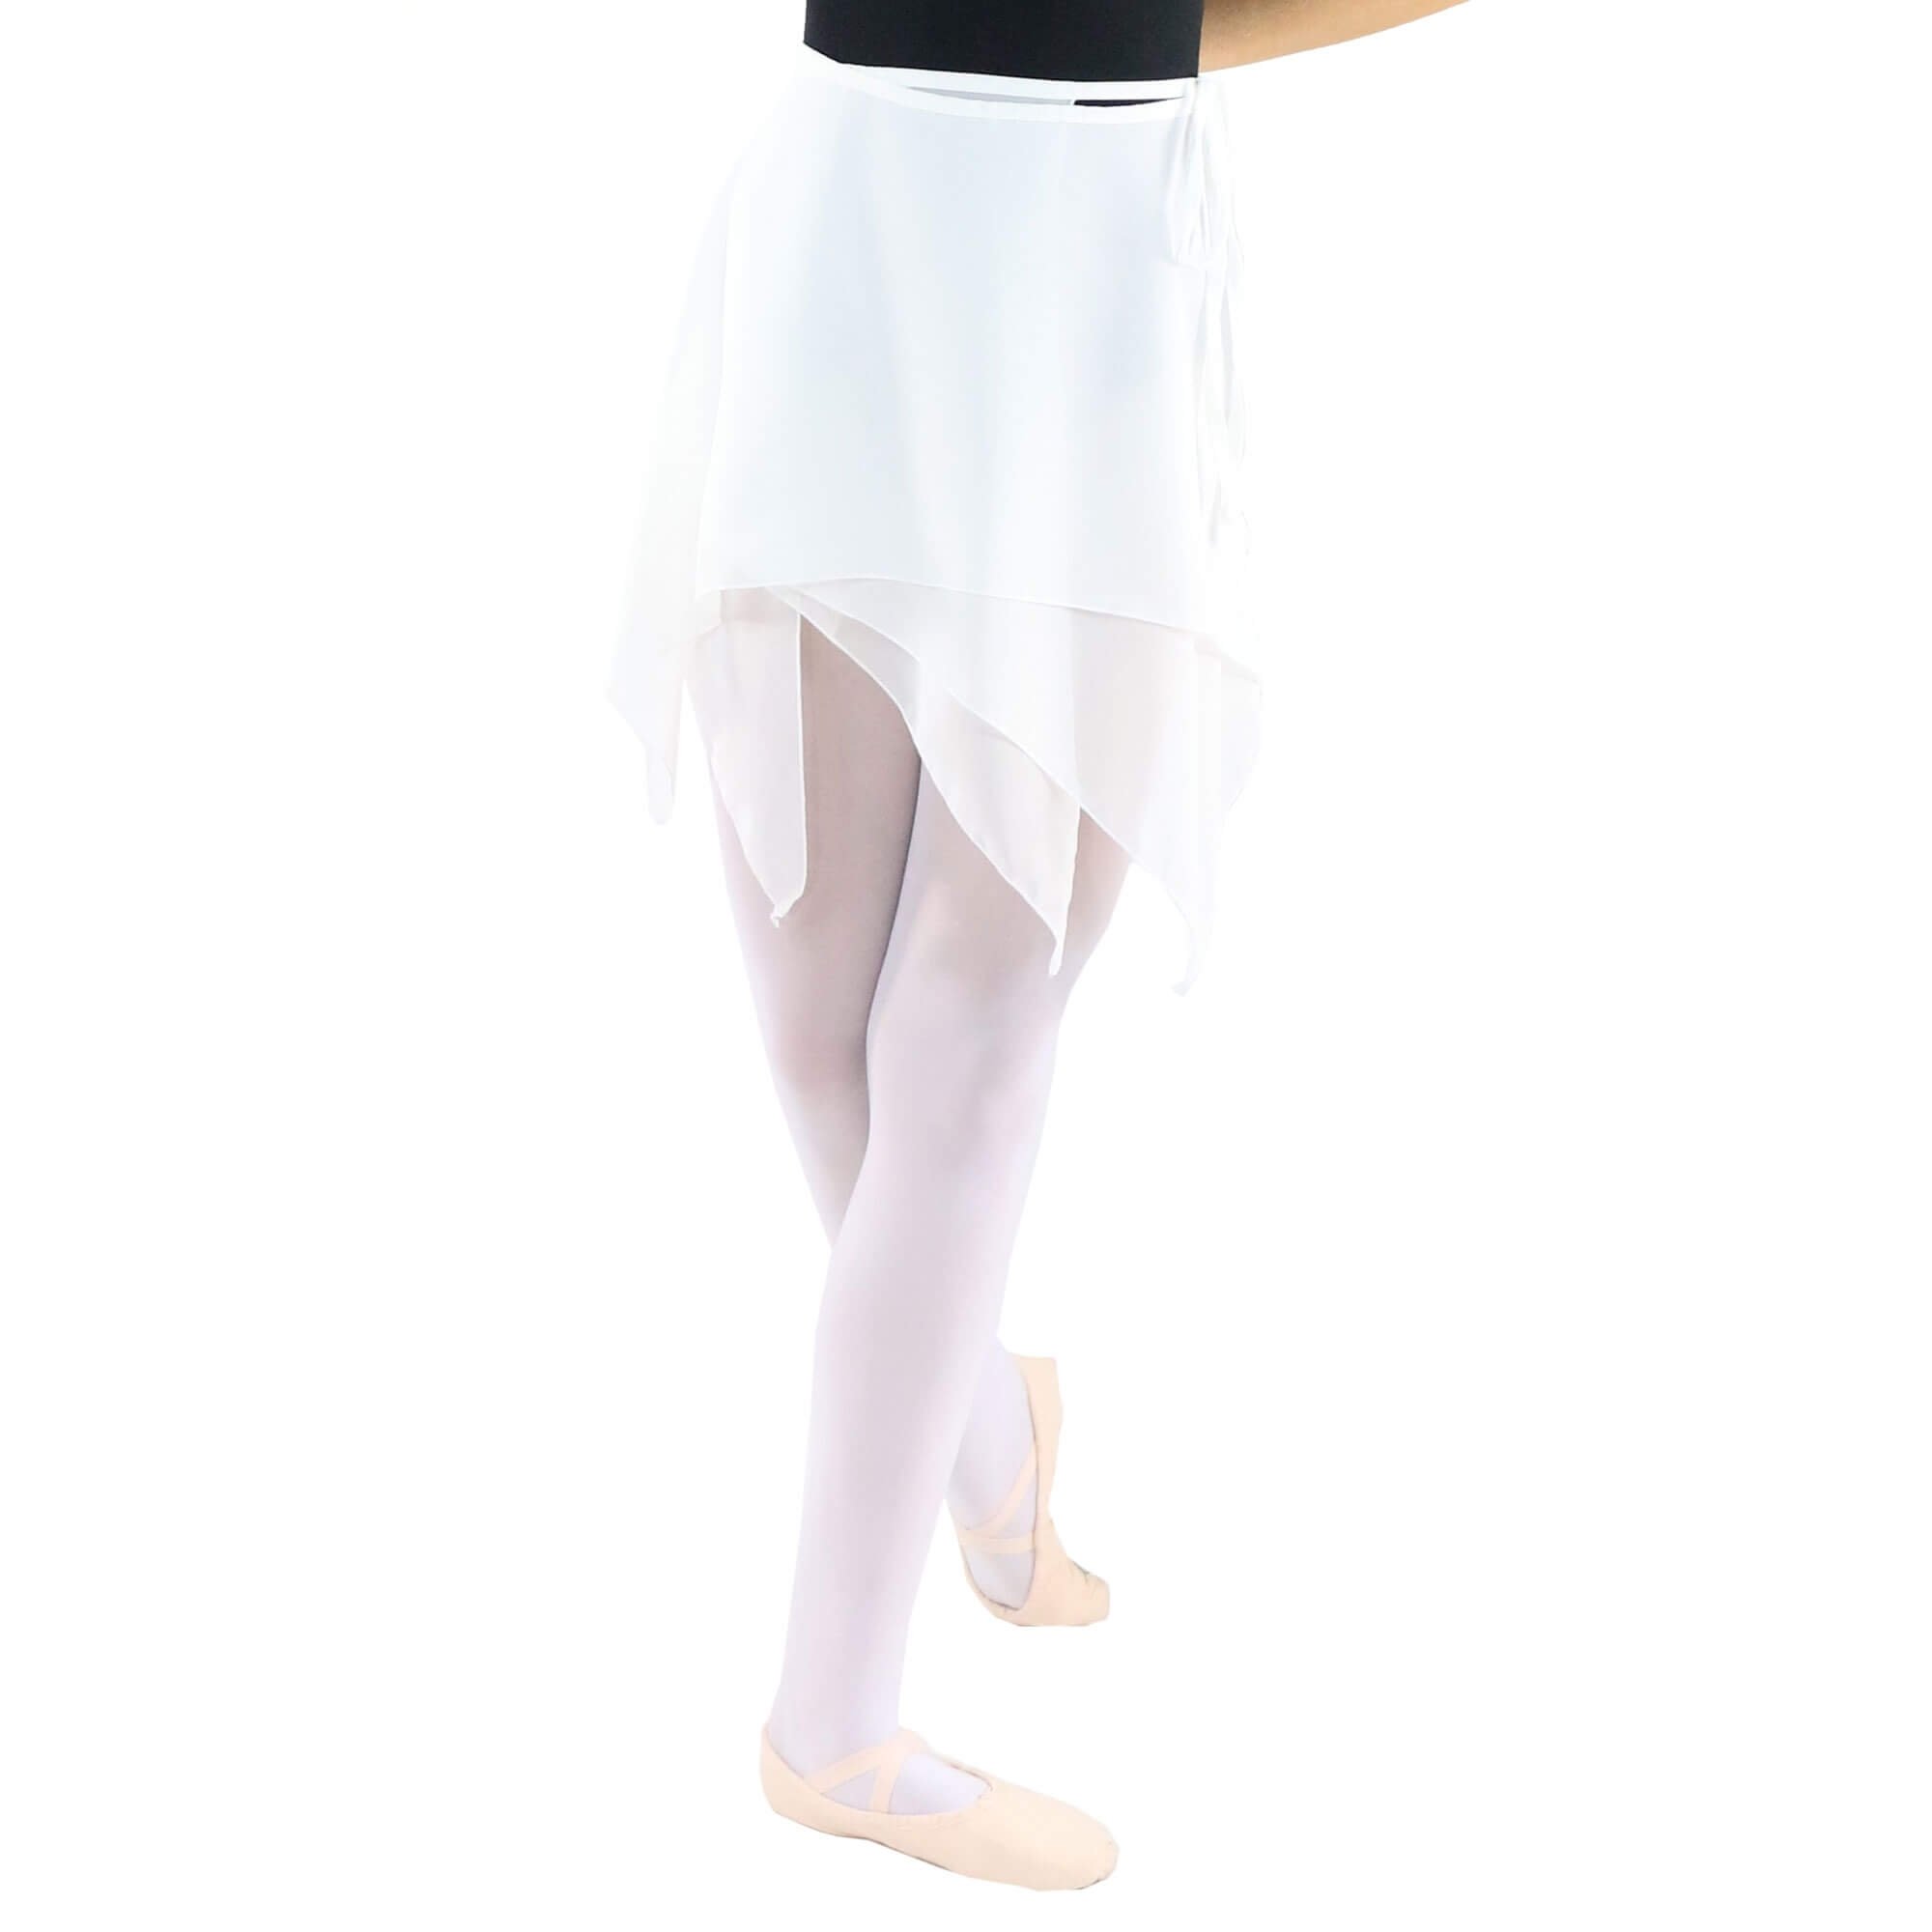 Danzcue Adult Asymmetric Ballet Dance Wrap Skirt - Click Image to Close